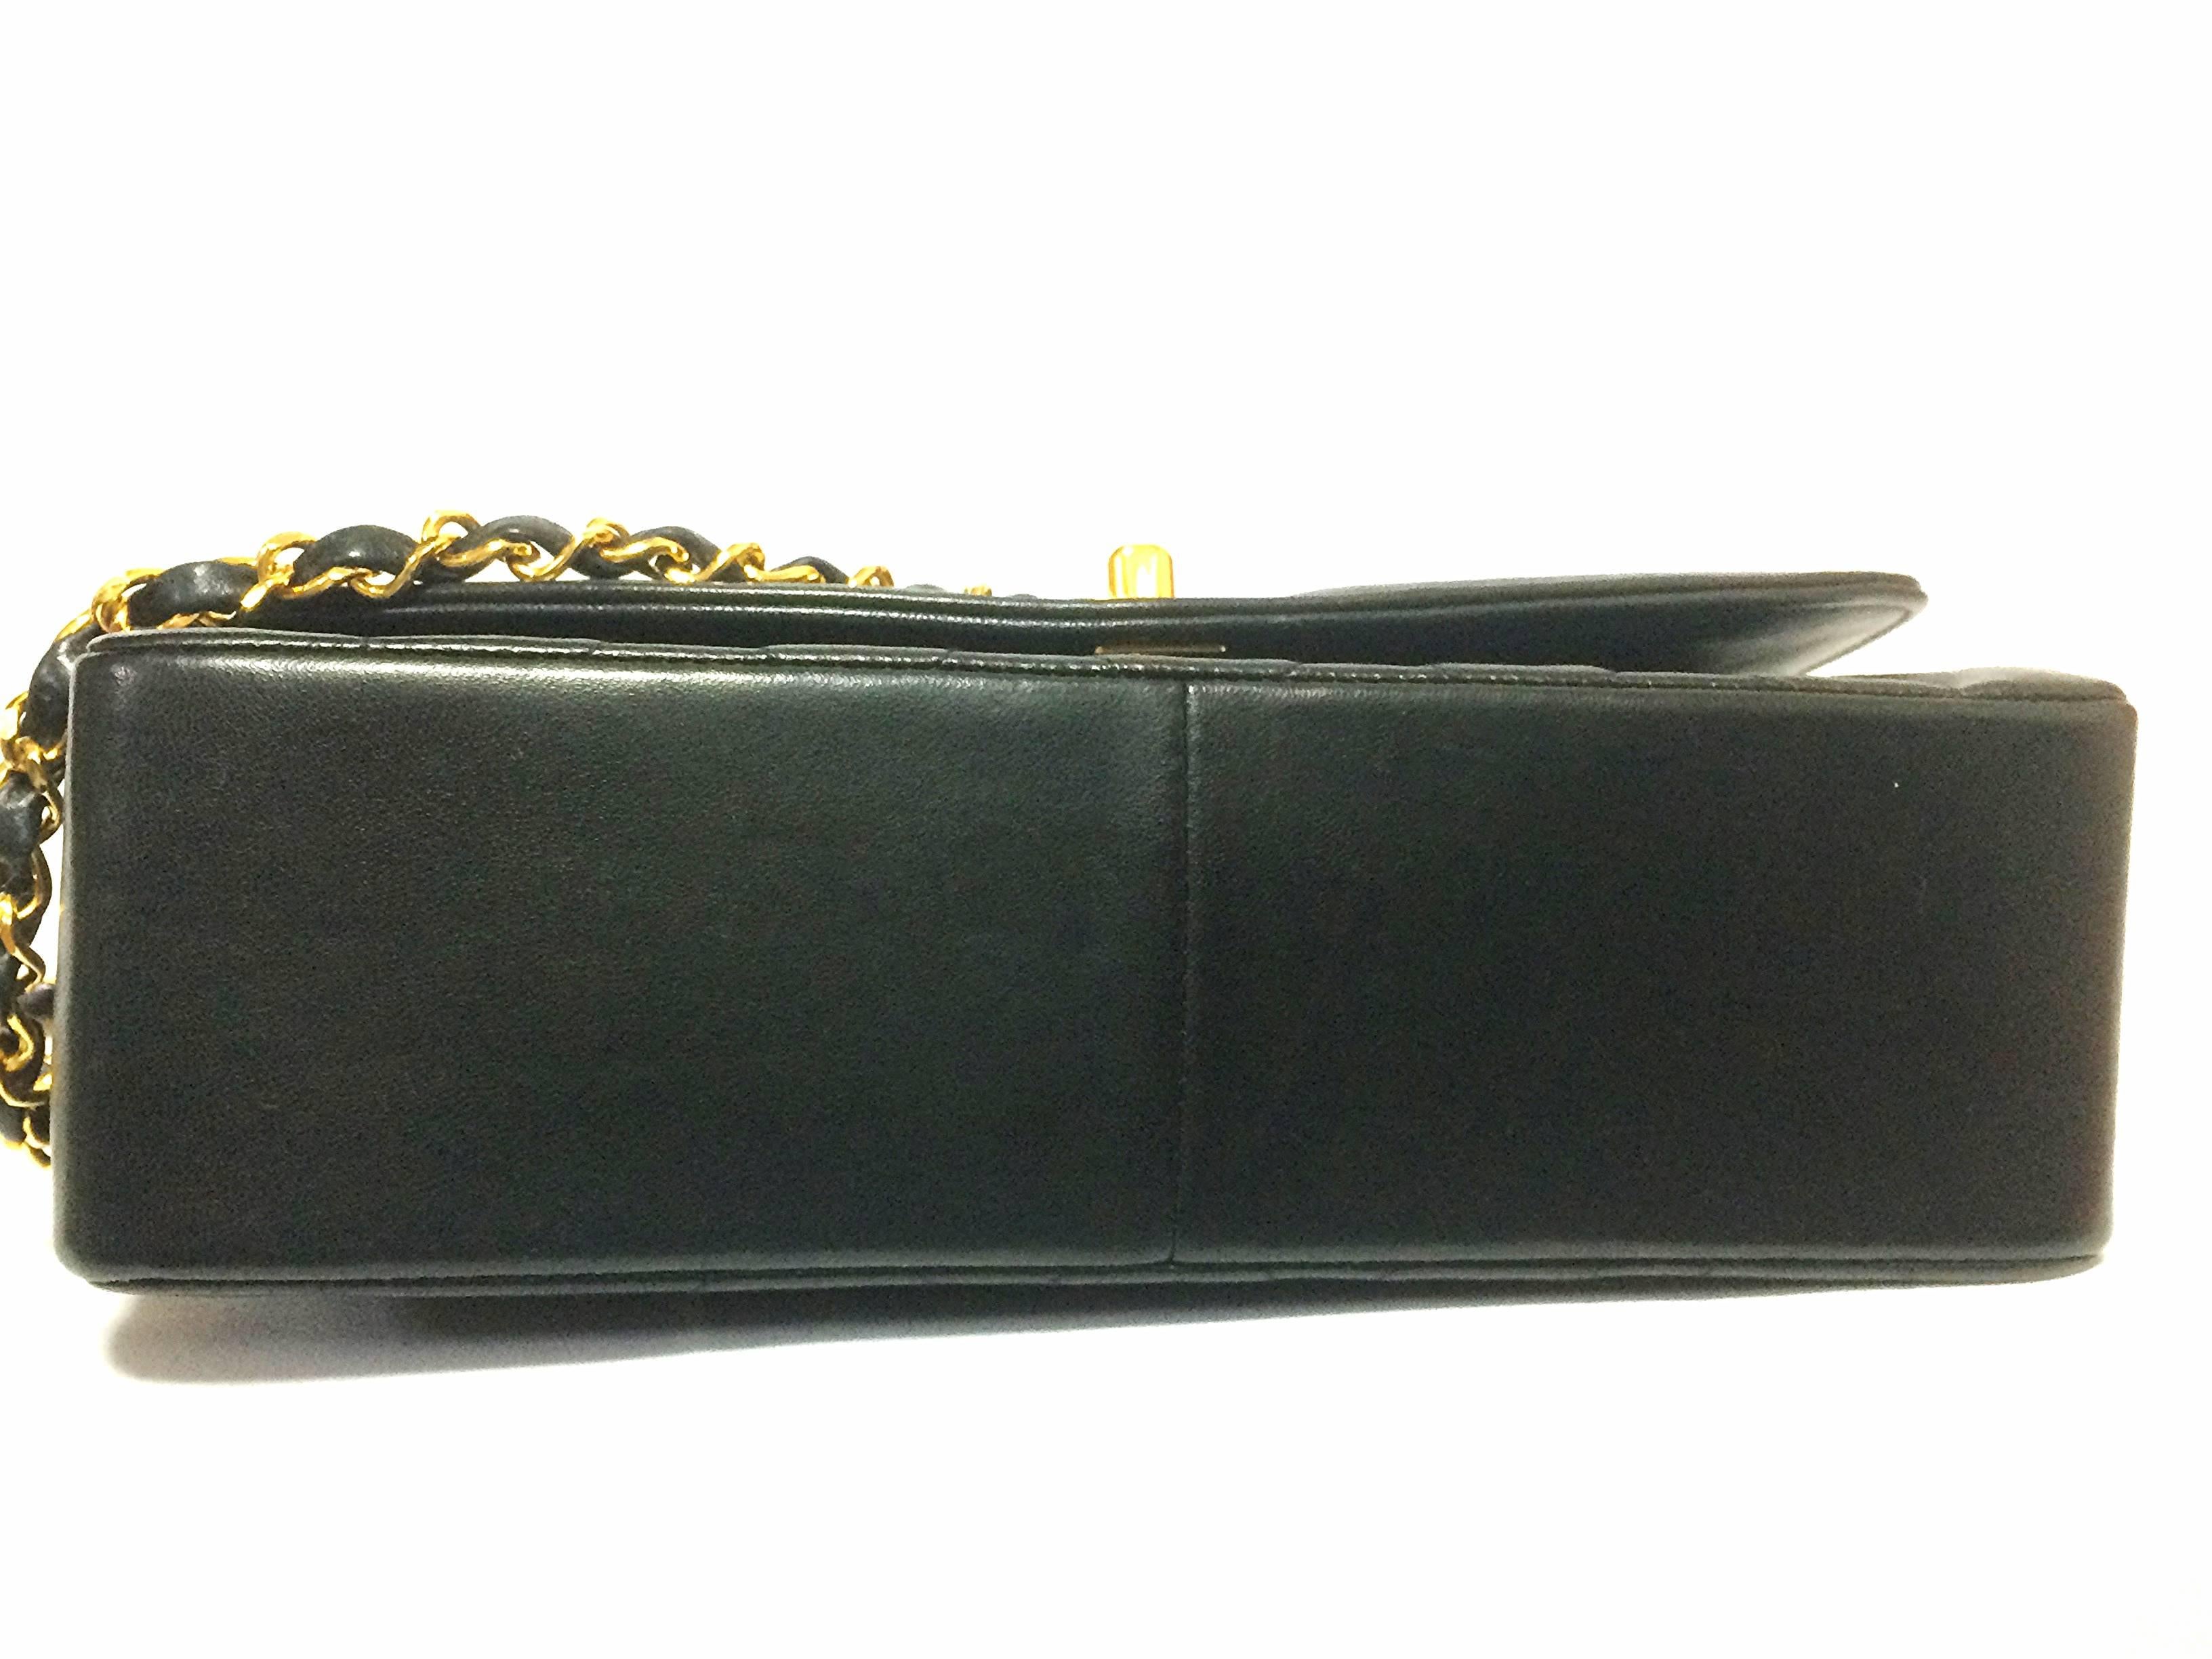 MINT. Vintage CHANEL black lambskin classic flap 2.55 gold chain shoulder bag. 1